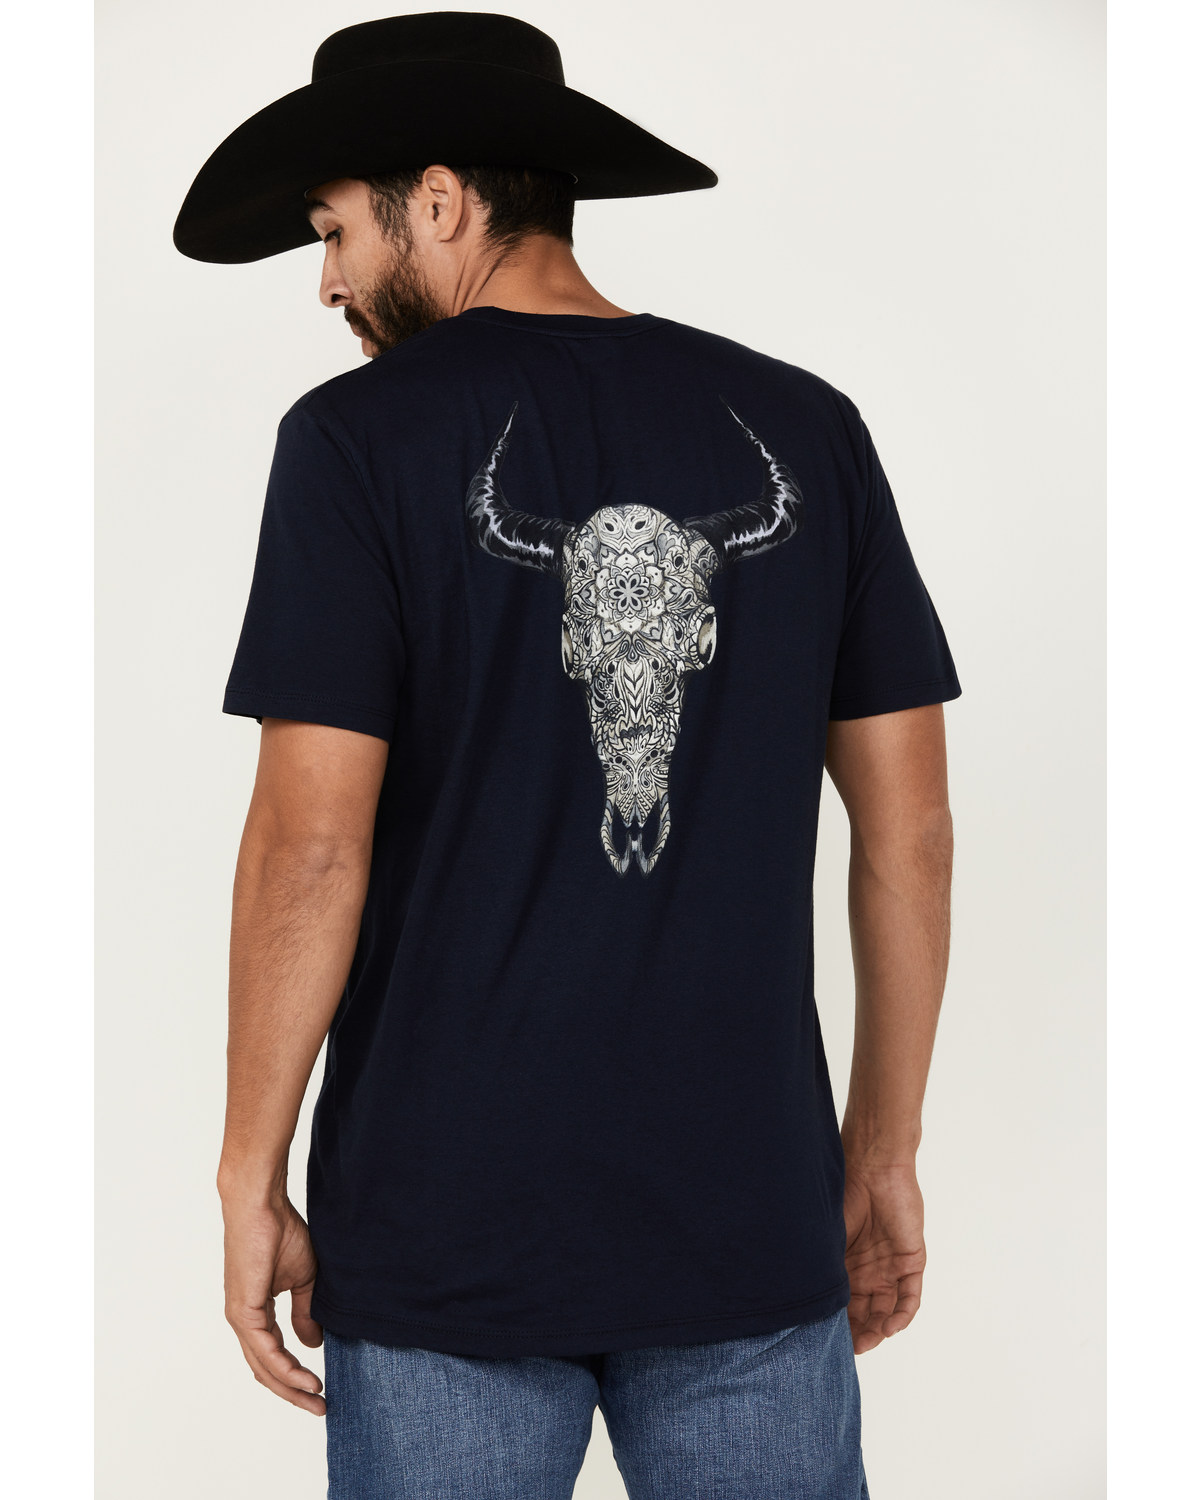 Cody James Men's Smoke Skull Short Sleeve Graphic T-Shirt